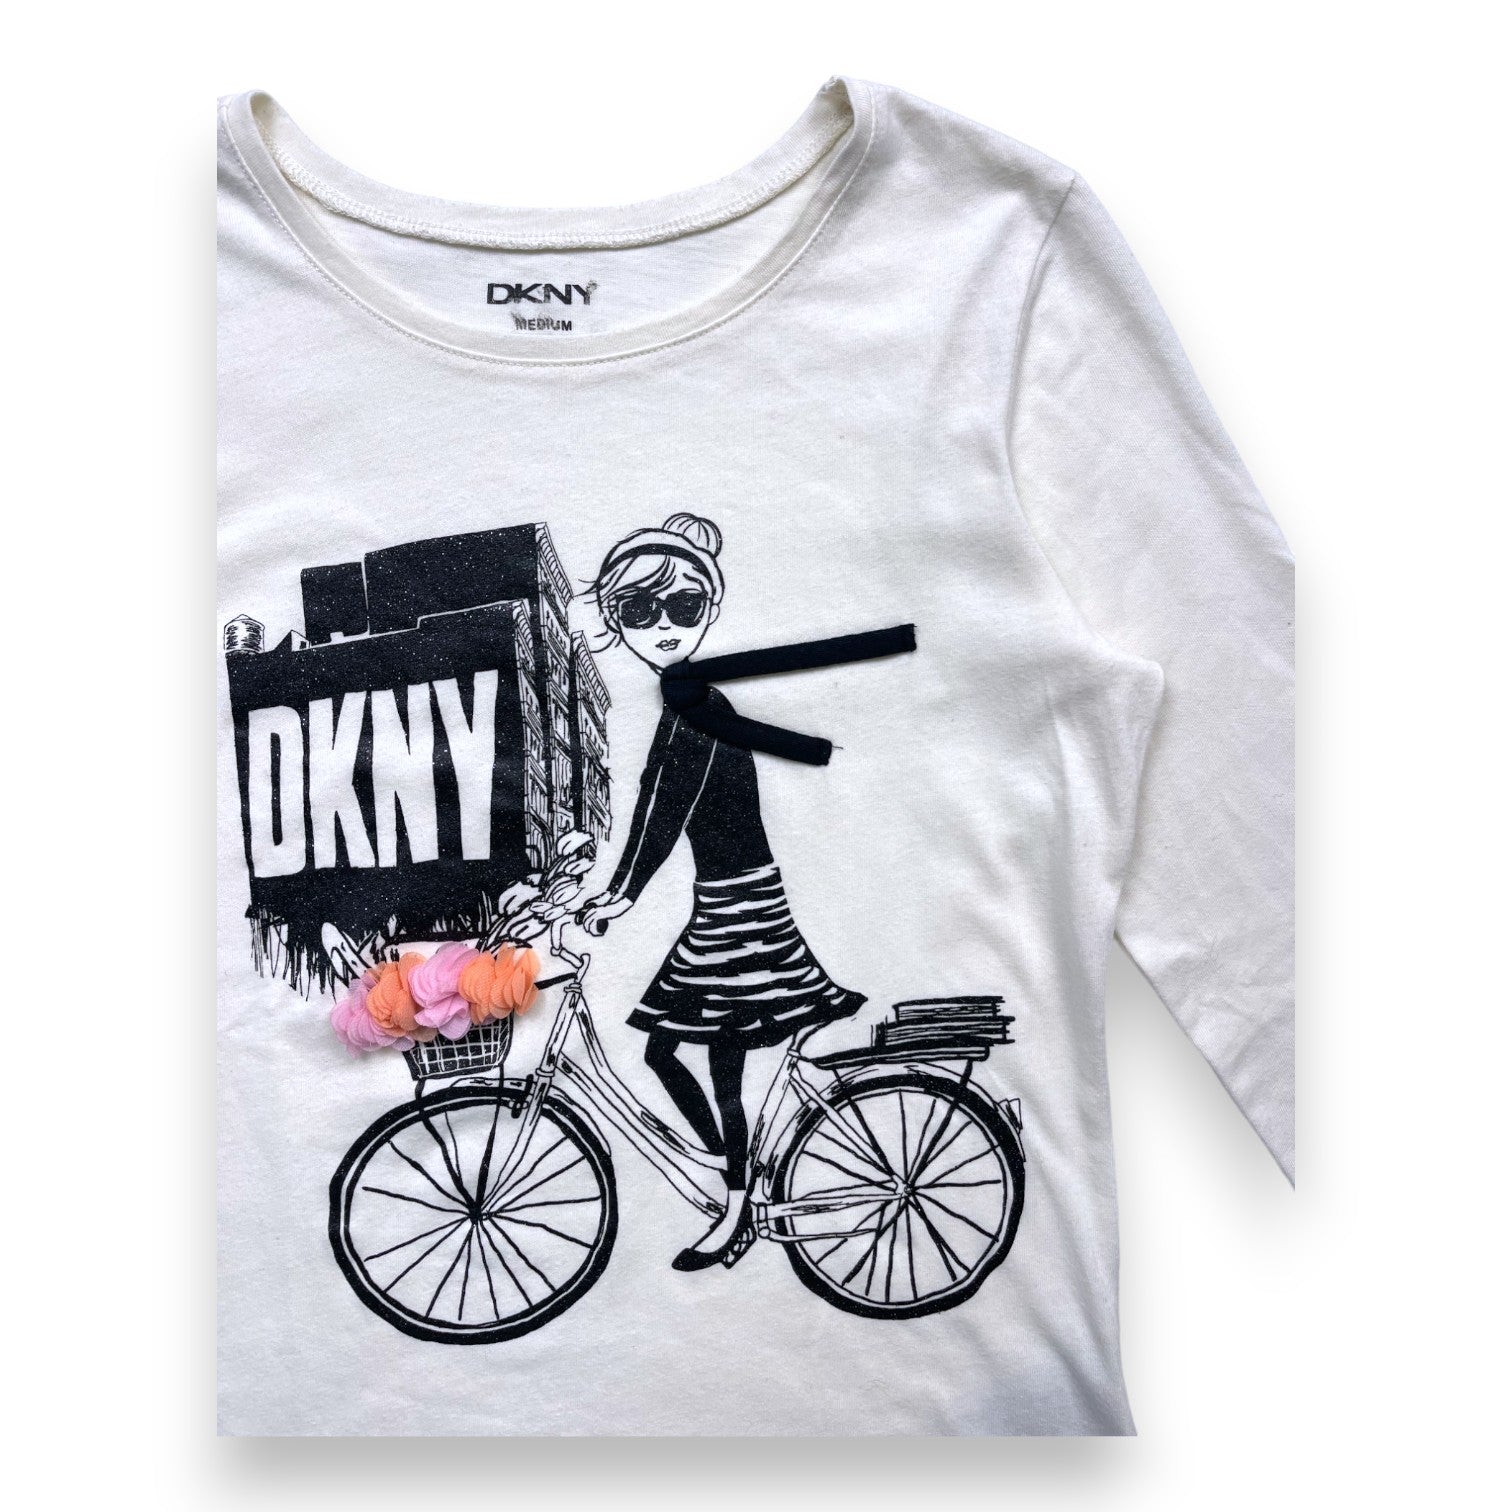 DKNY - T-shirt manches longues écru à motifs - 10 ans